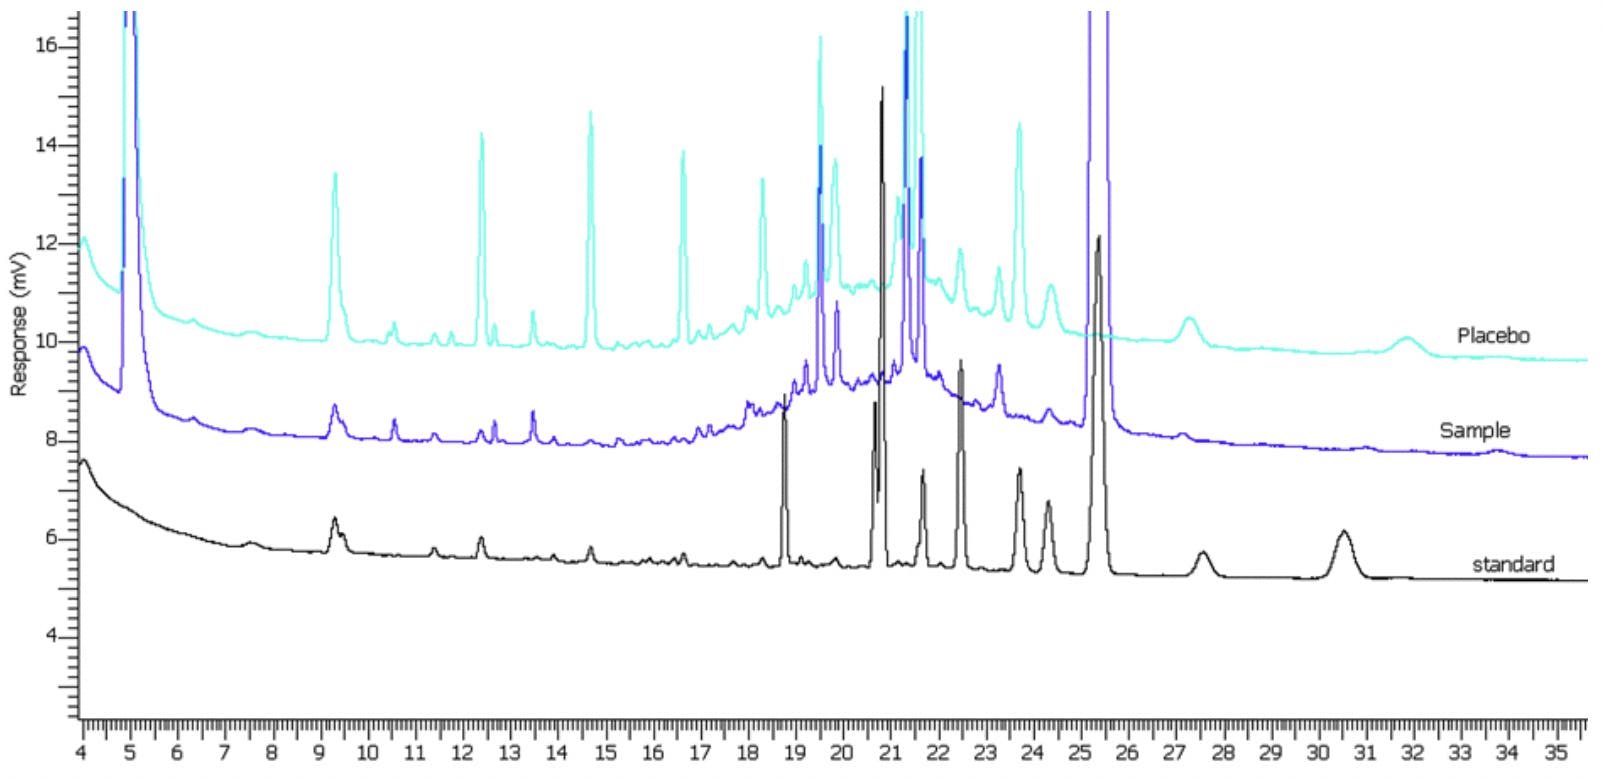 GC chromatogram showing broad baseline disturbances also known as a baseline ‘hump’.